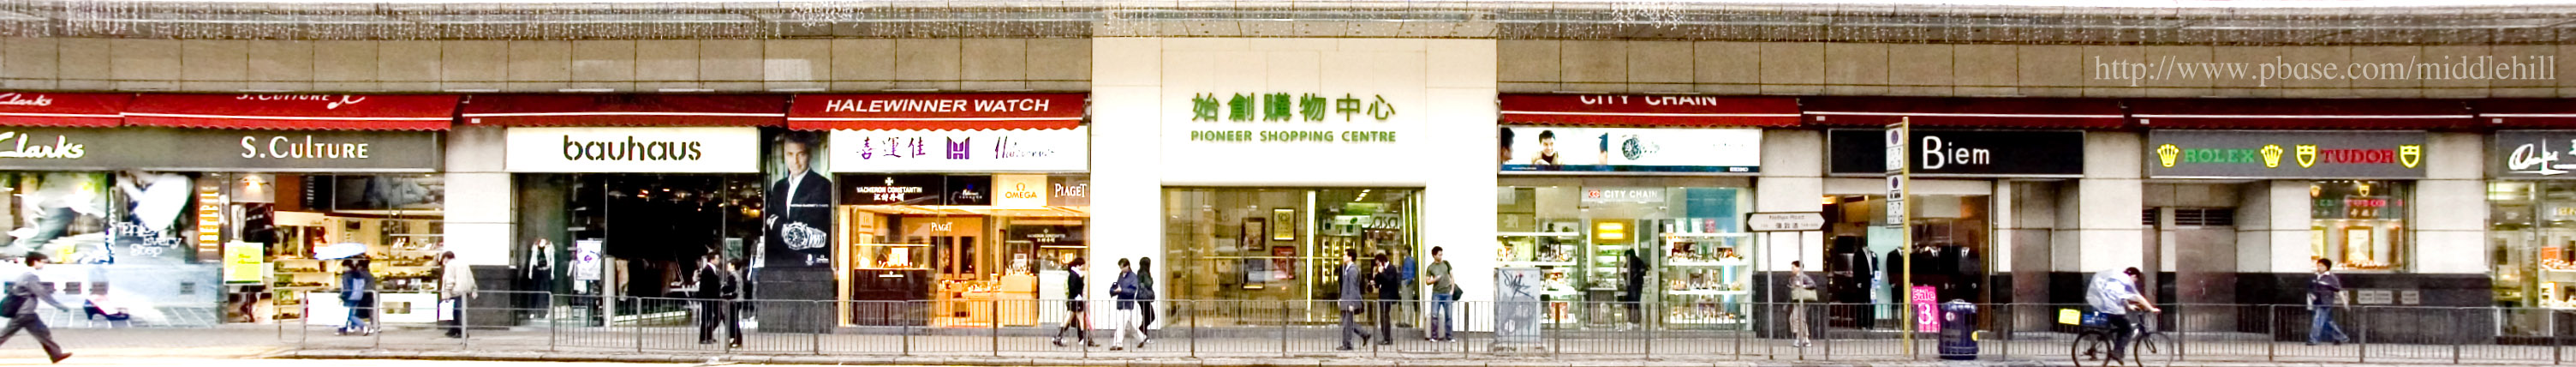 Pioneer Centre Shopping Arcade lФ